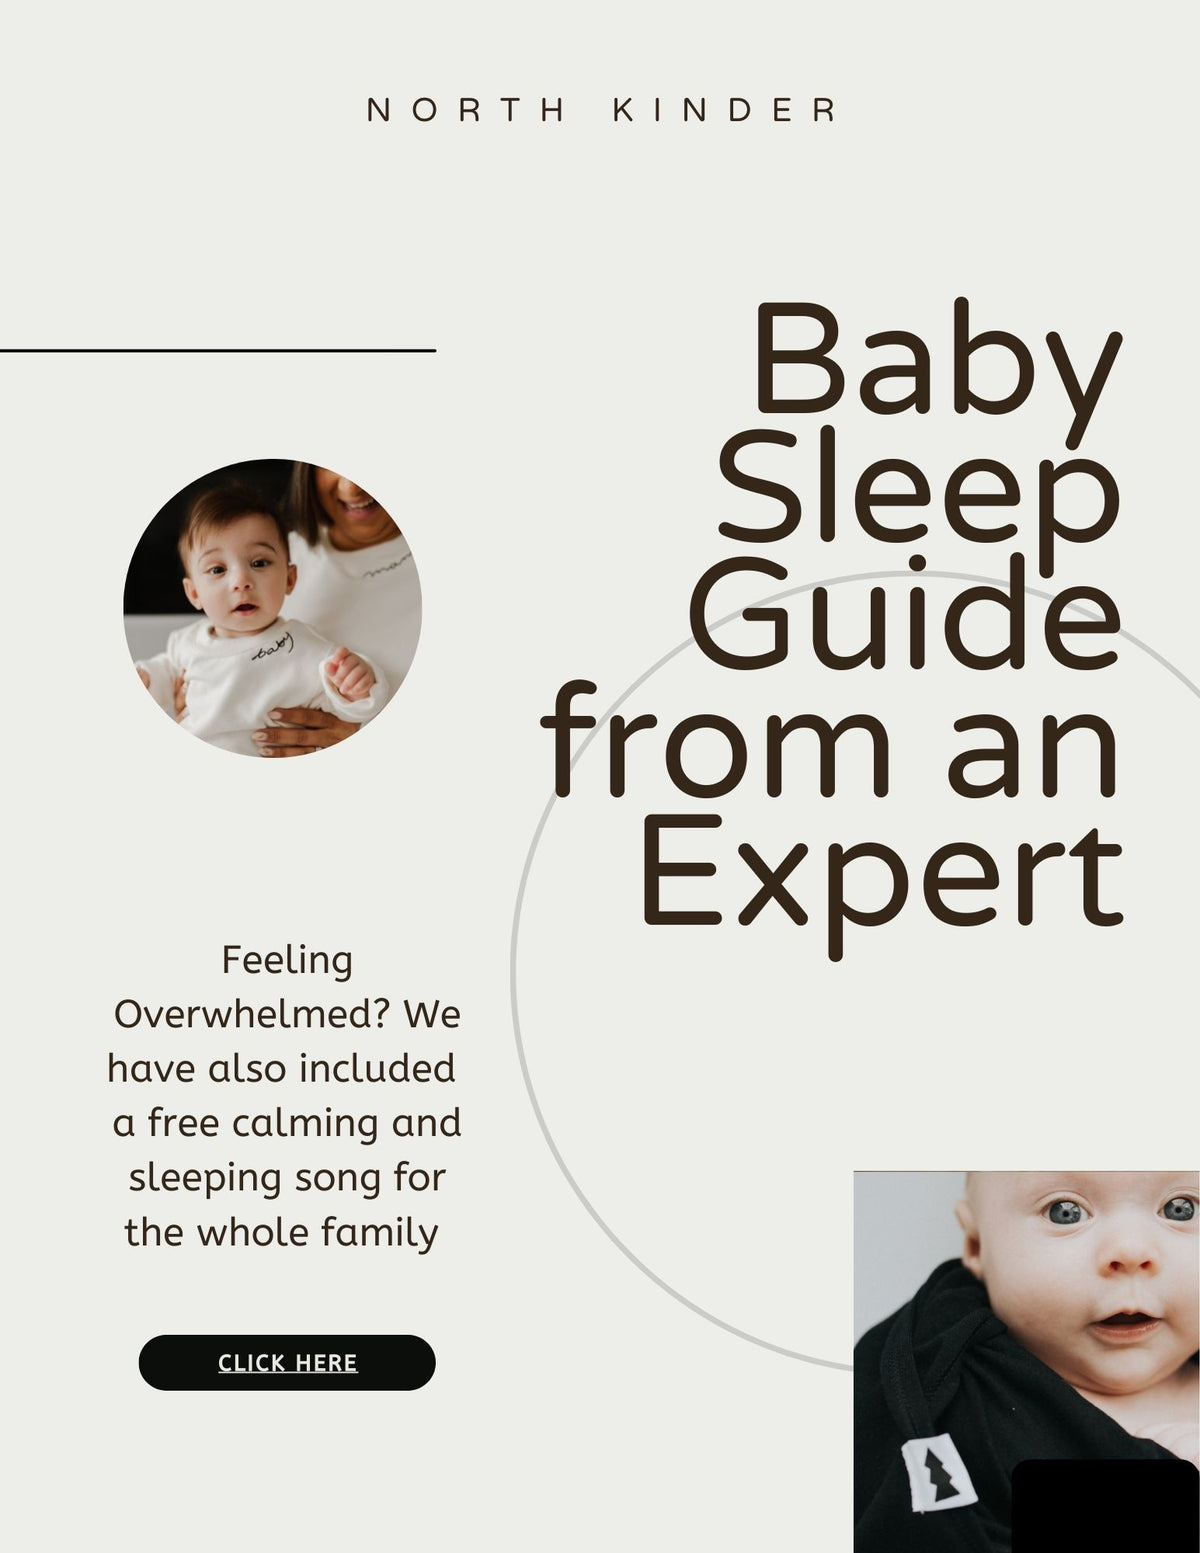 Baby sleep guide from an expert